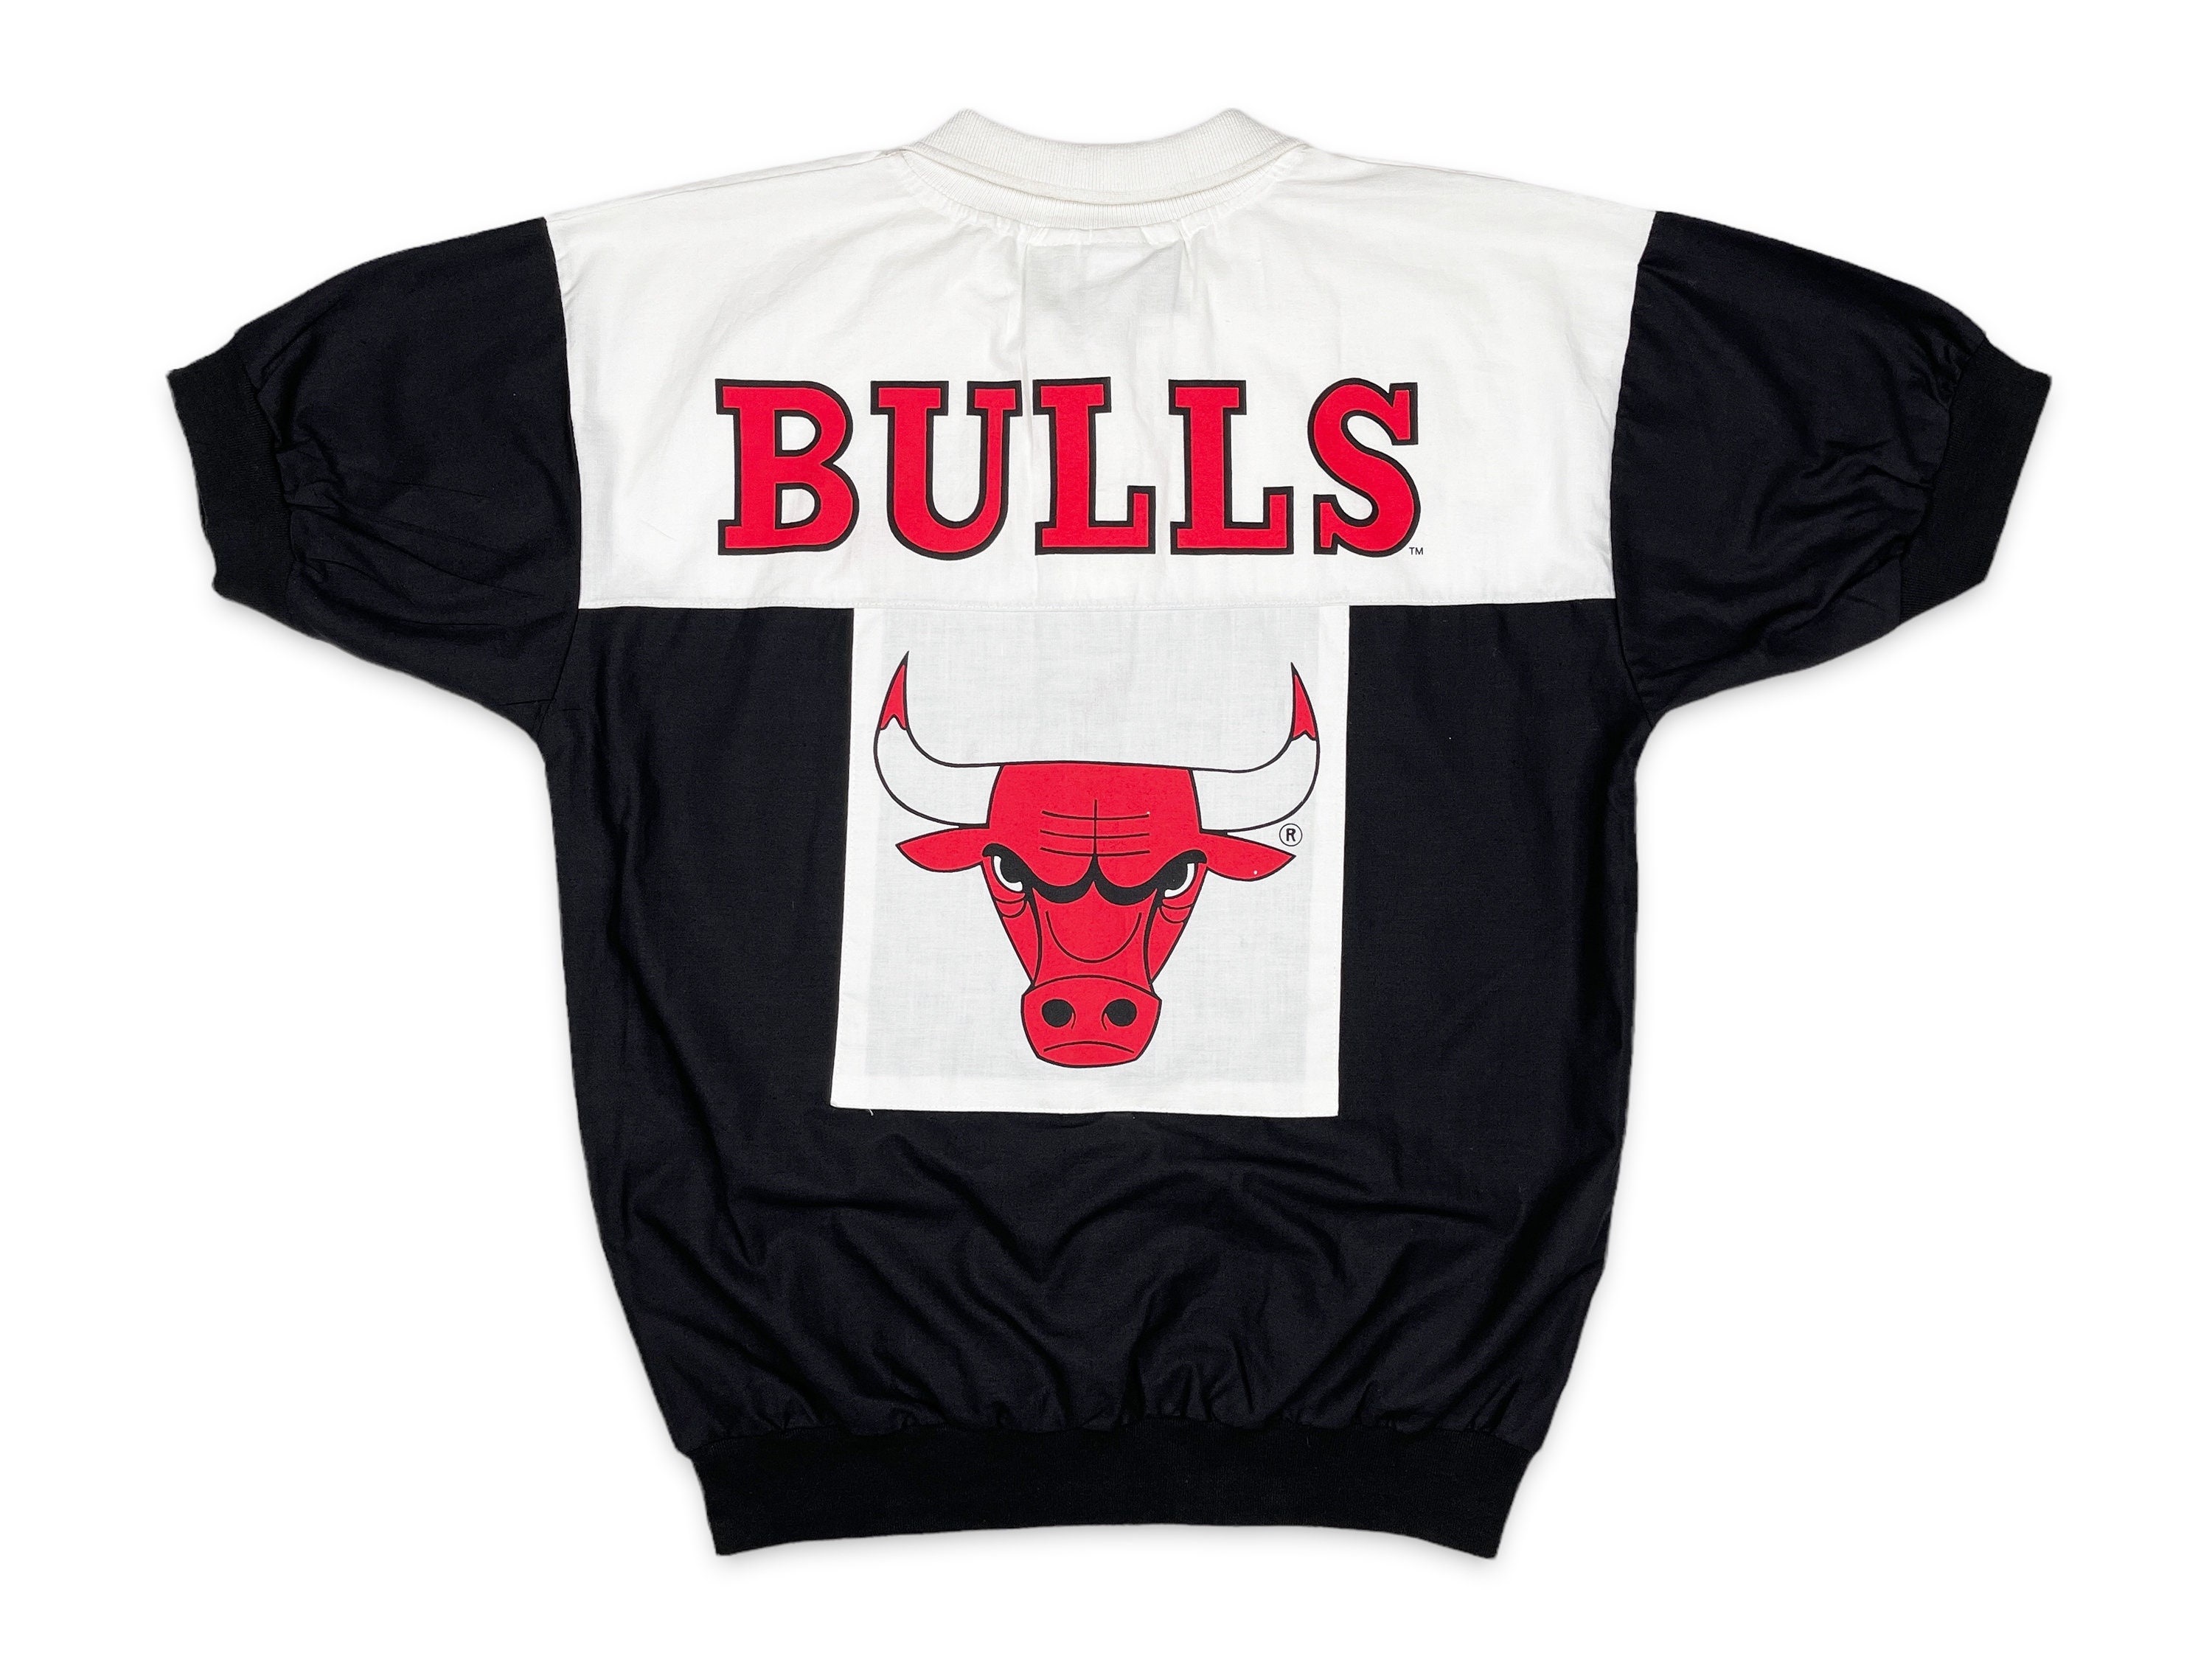 Vintage Chicago Bulls Polo Shirt 90s NBA Michael Jordan -  Hong Kong